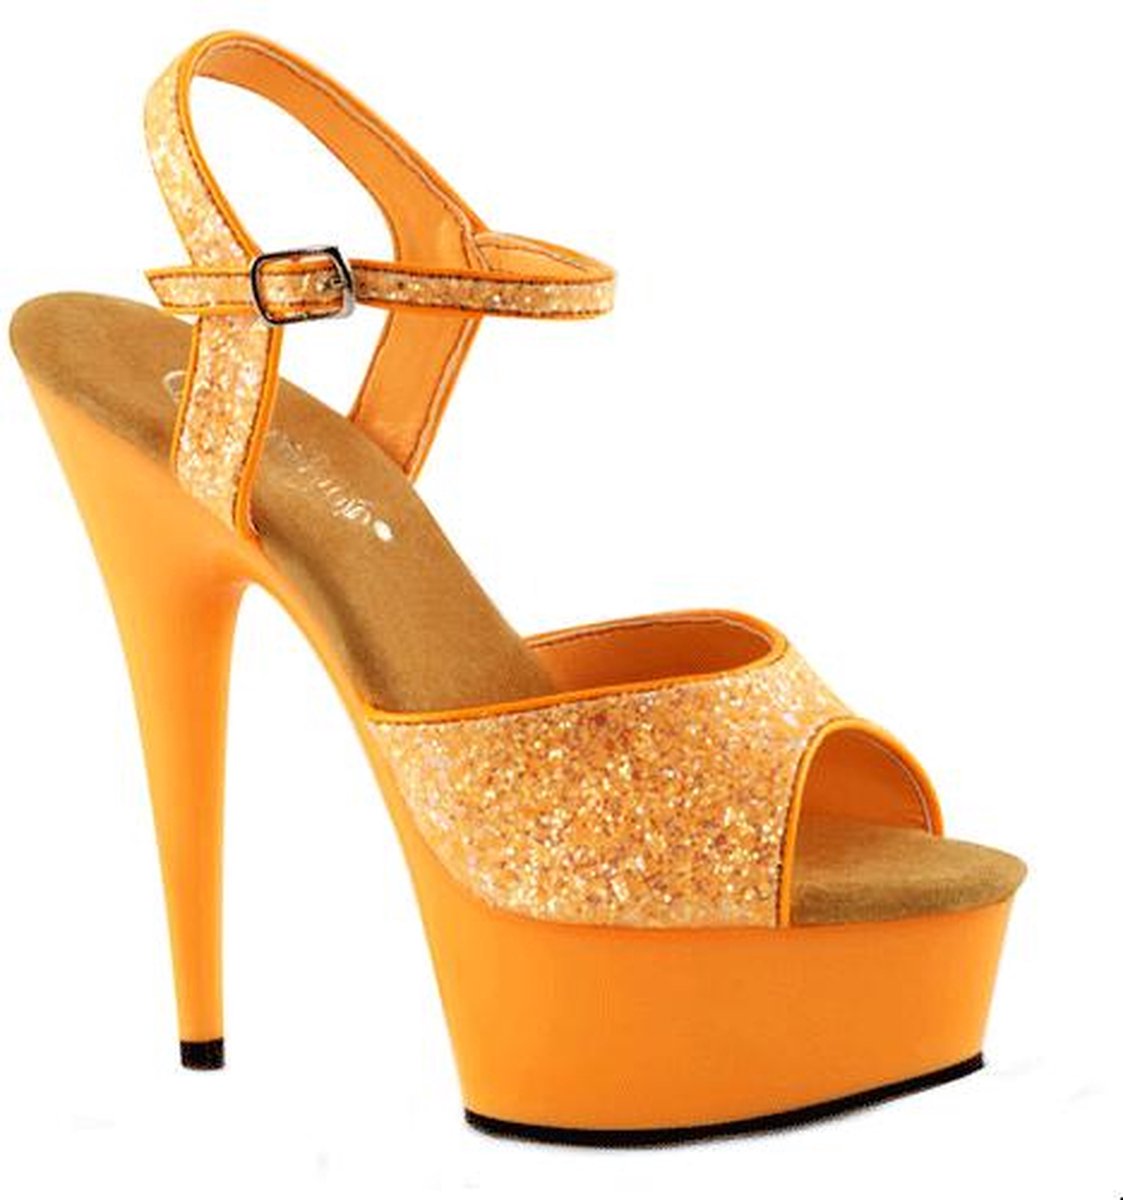 Neon oranje glitter sandalen Caydence 39 - Merkloos